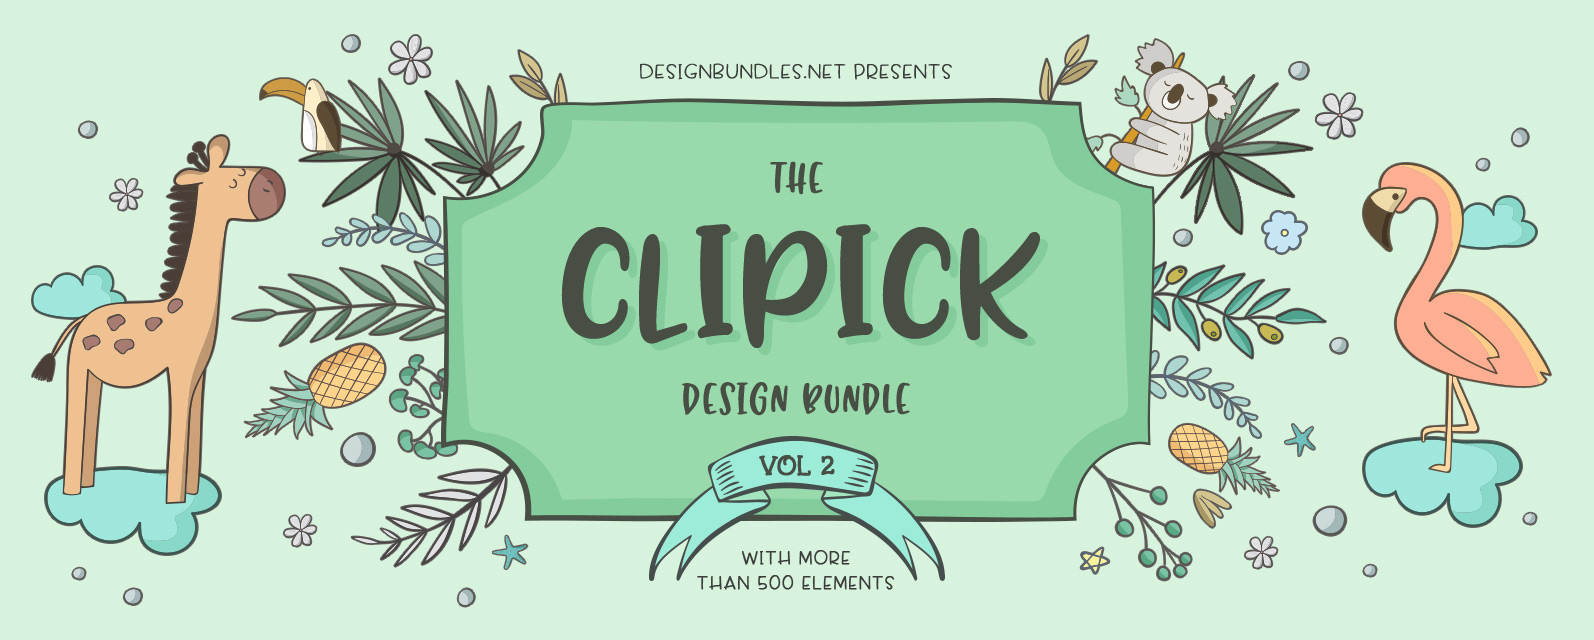 The-Clipick-Design-Bundle-V2-Main-Cover.jpg